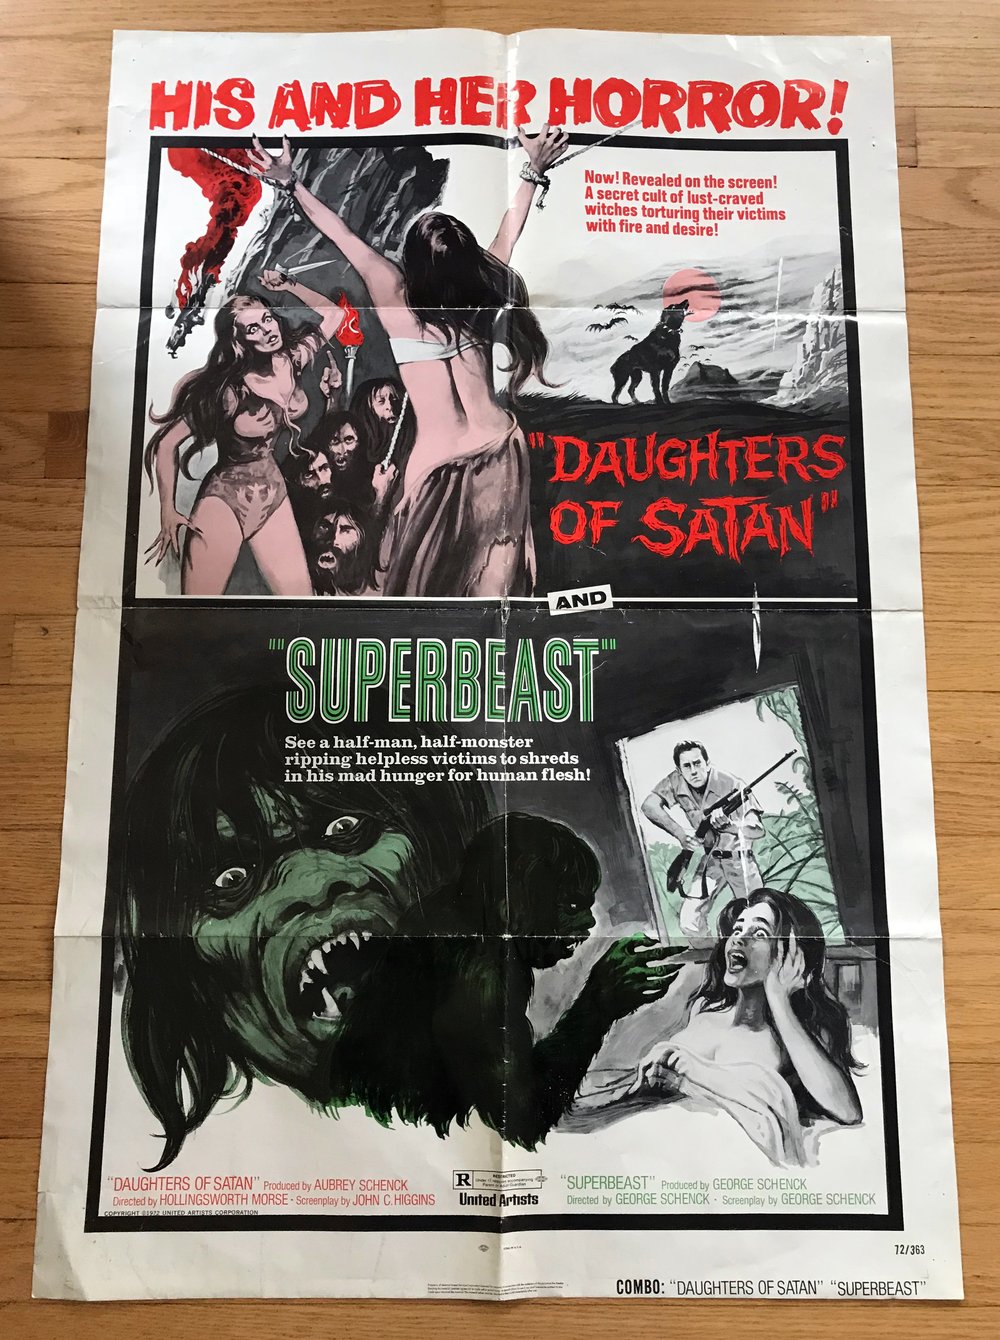 1972 DAUGHTERS OF SATAN/SUPERBEAST U.S. Combo One Sheet Movie Poster